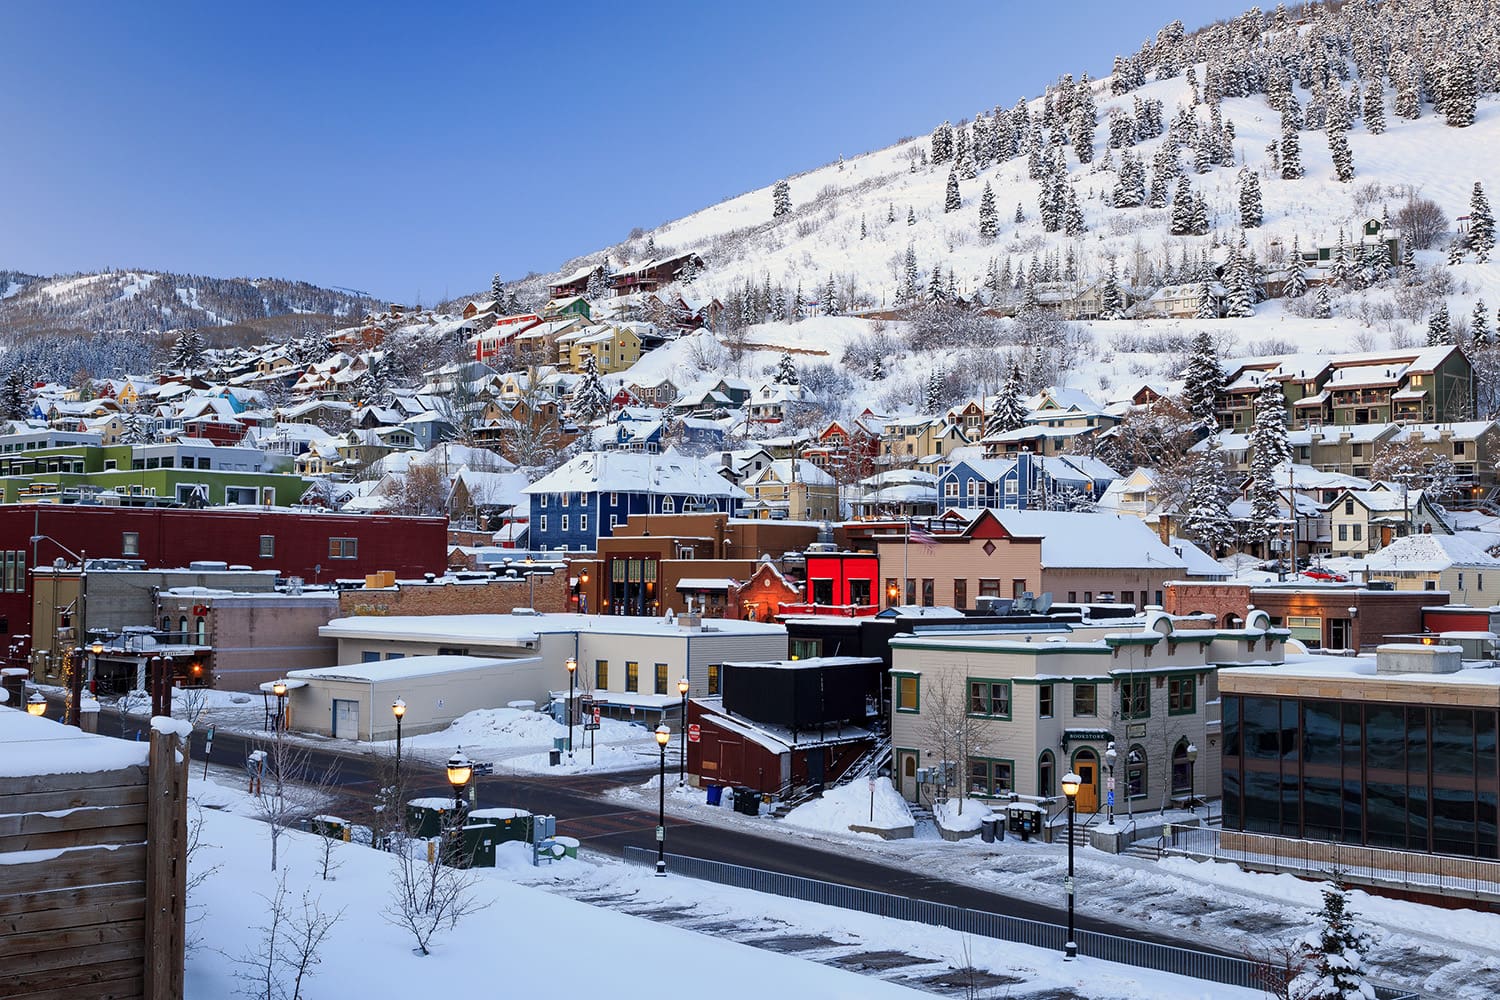 Park City, Utah - JCA Images/Shutterstock